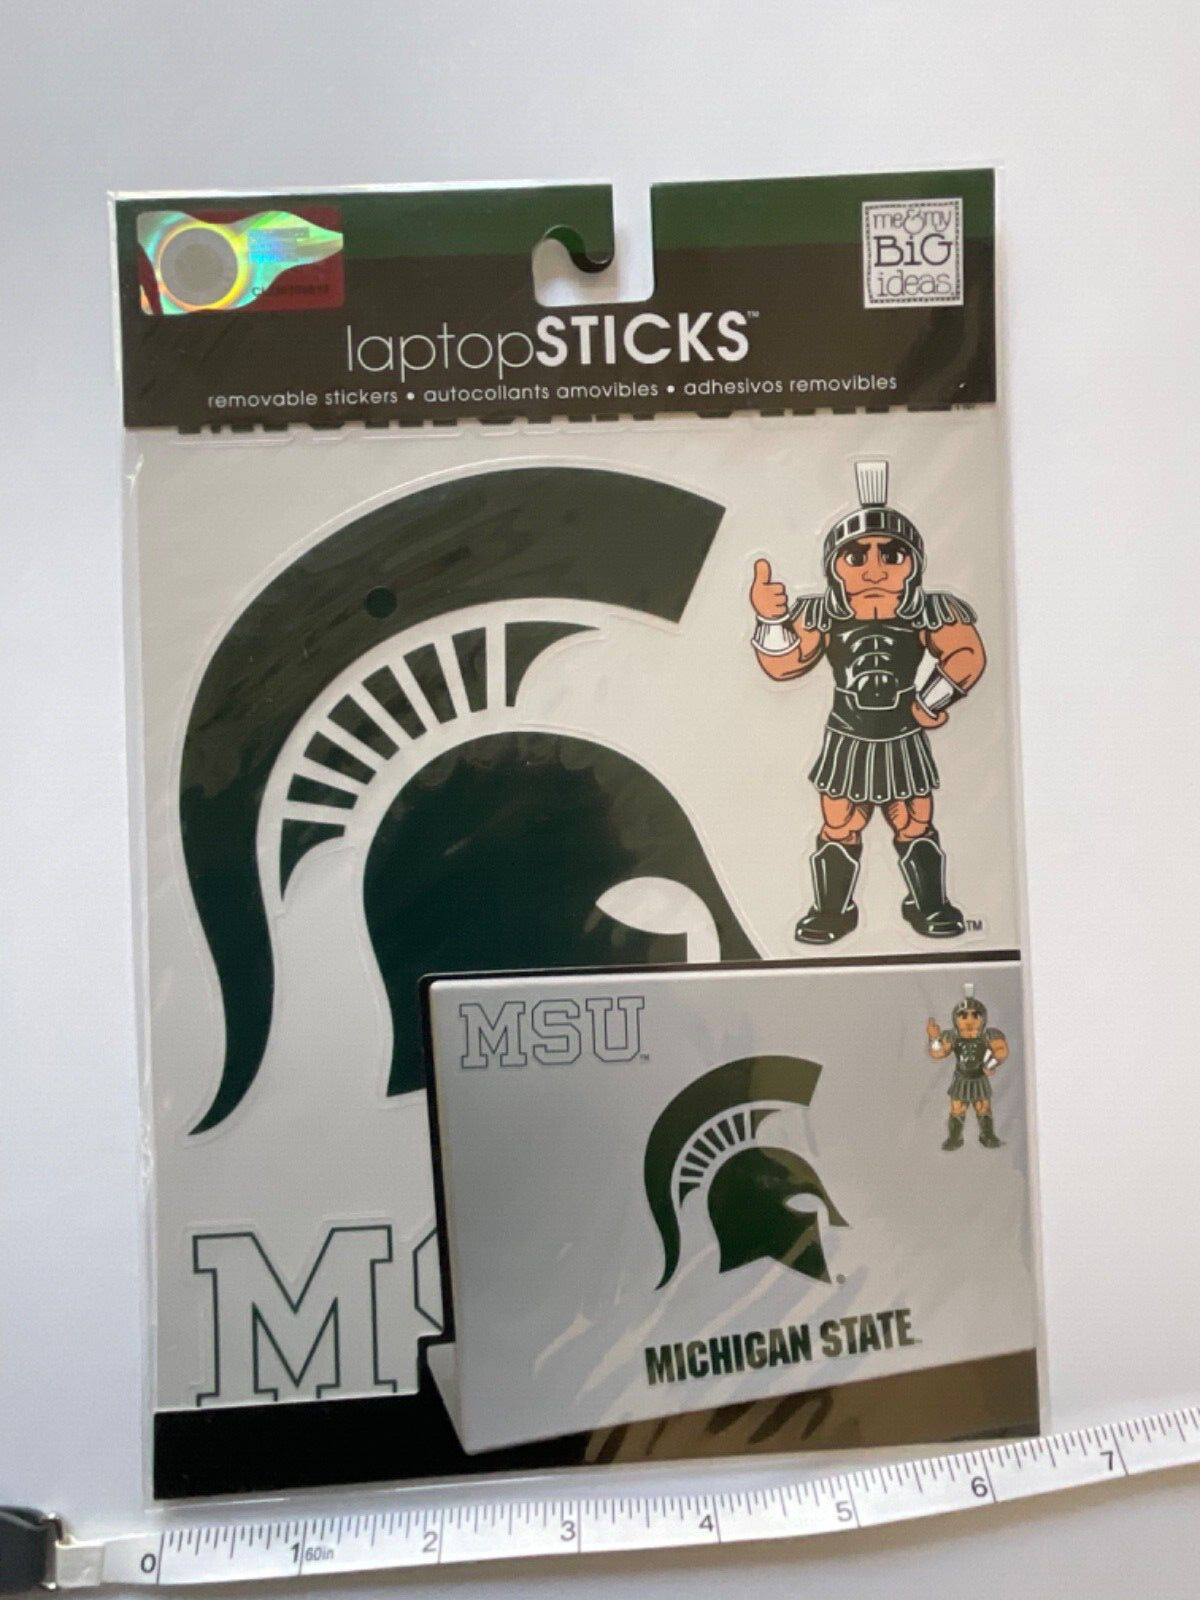 NWT Me & My Big Ideas laptop sticks removable stickers Michigan State University